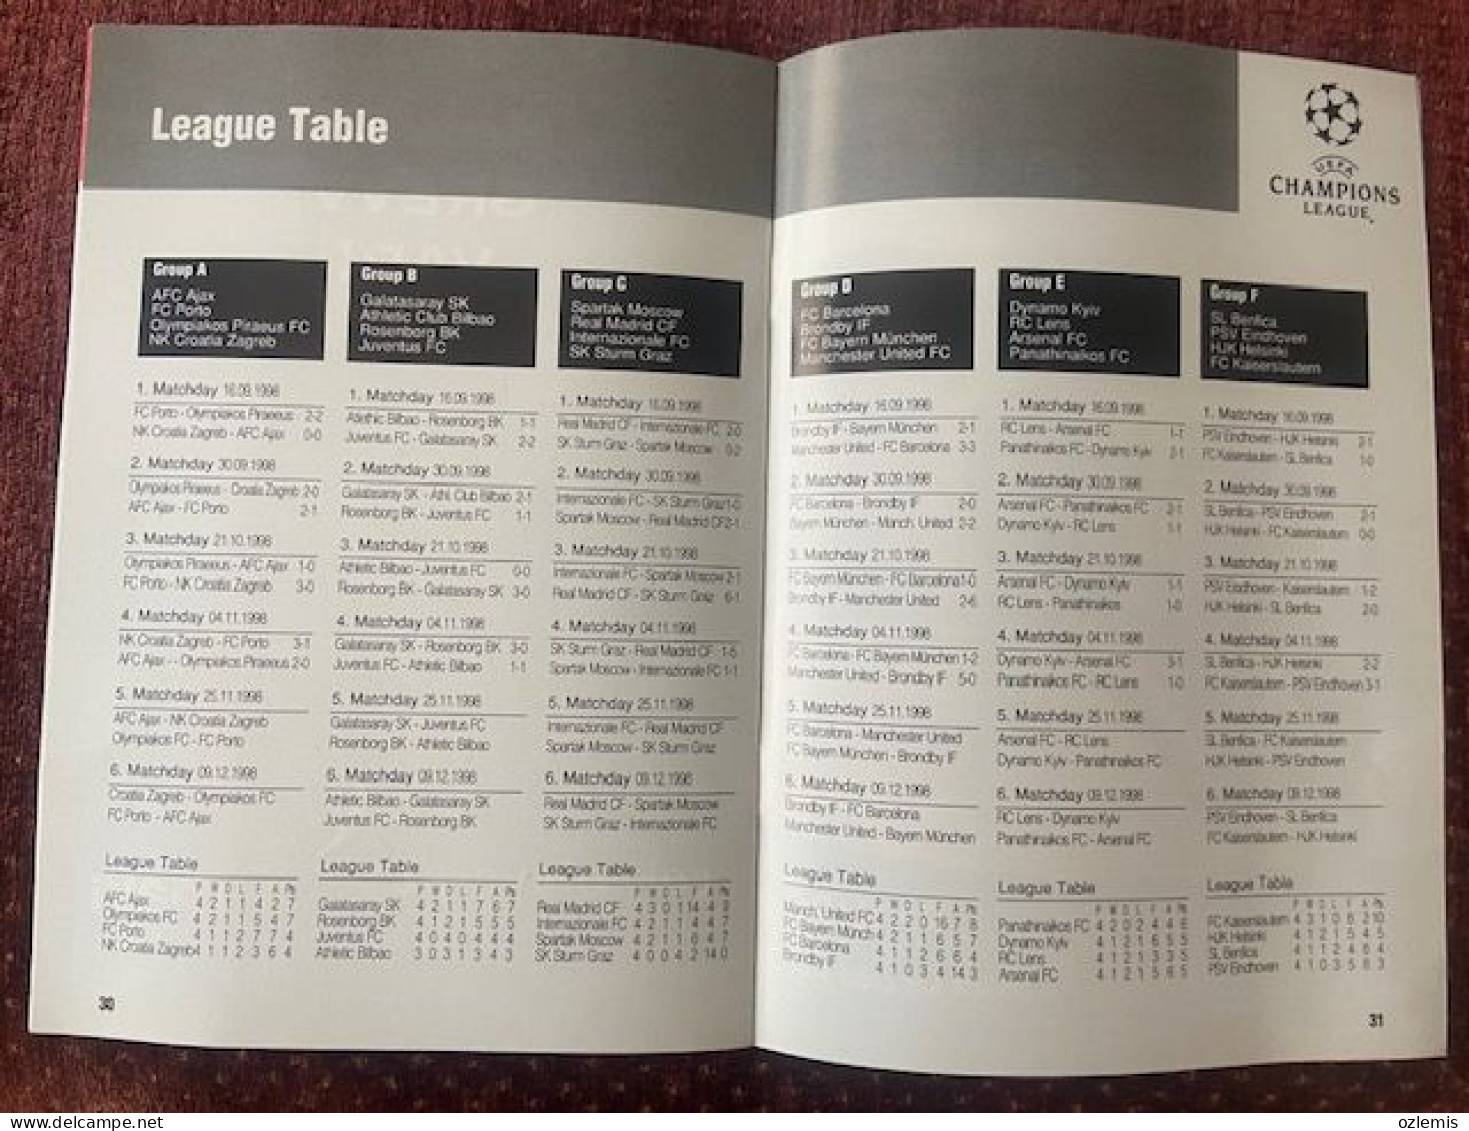 GALATASARAY - JUVENTUS FC  ,UEFA CHAMPIONS LEAGUE ,MATCH SCHEDULE ,1998 - Books